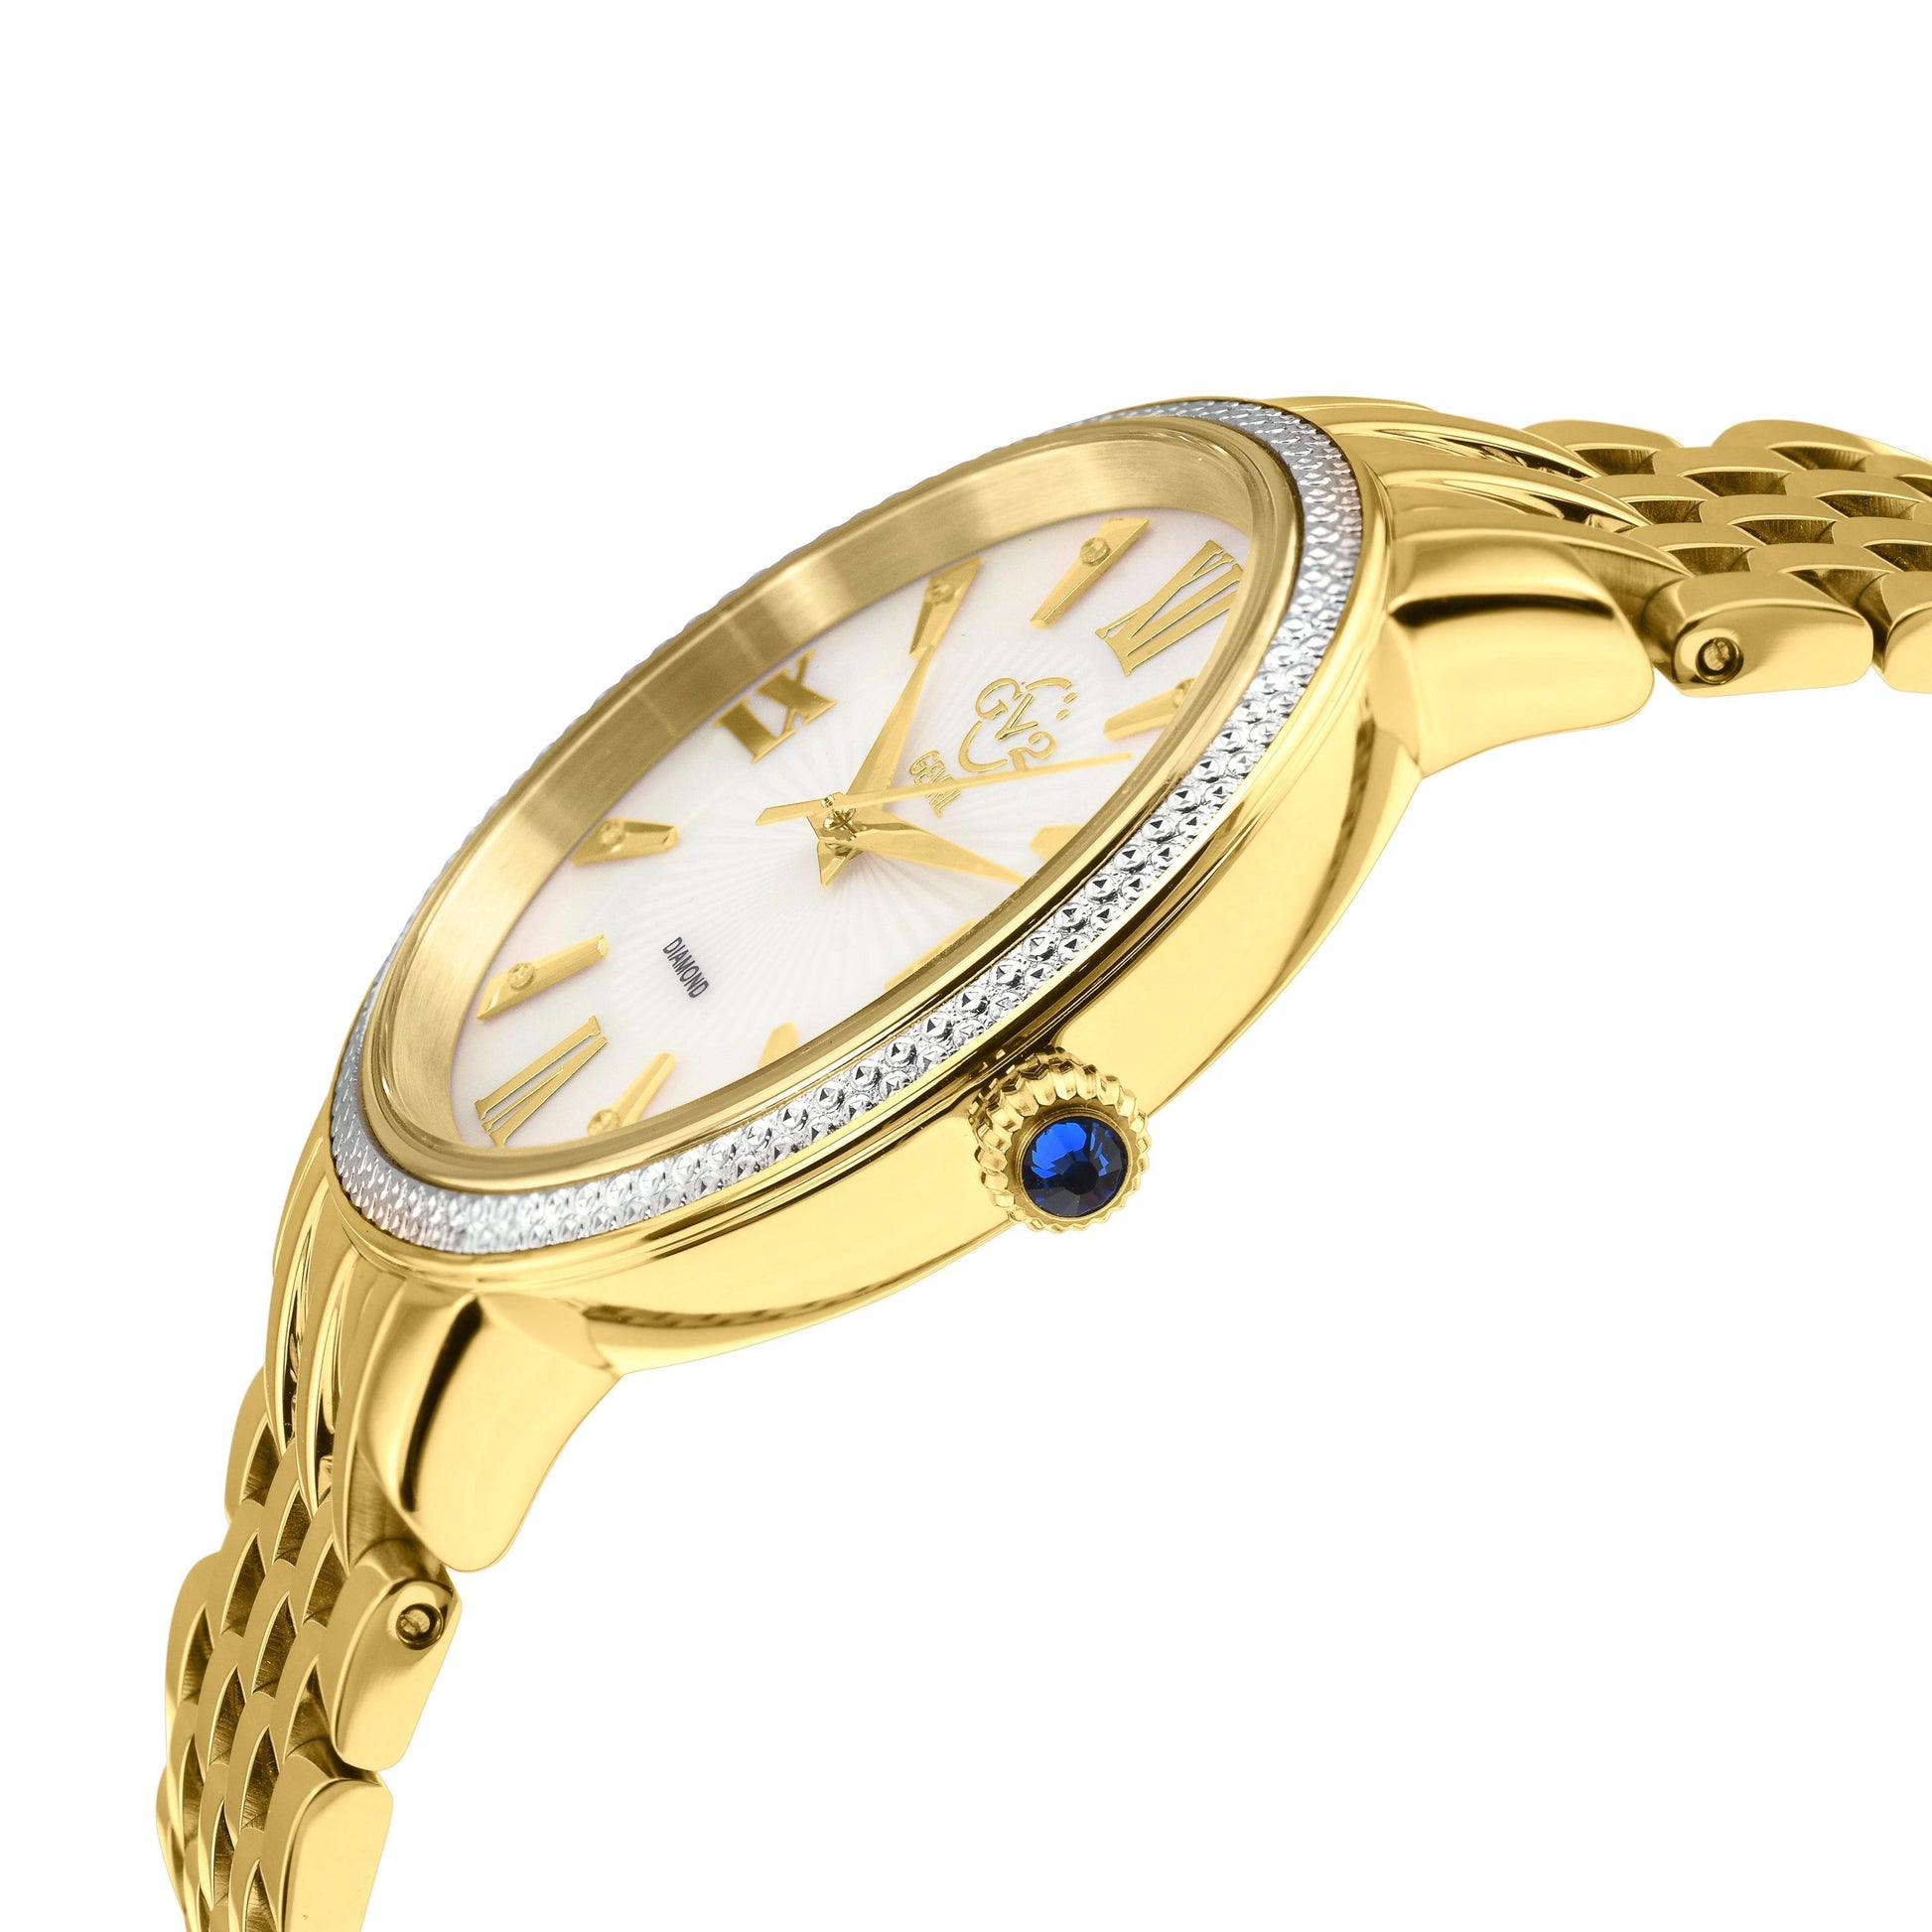 Gevril-Luxury-Swiss-Watches-GV2 Genoa Diamond-12532